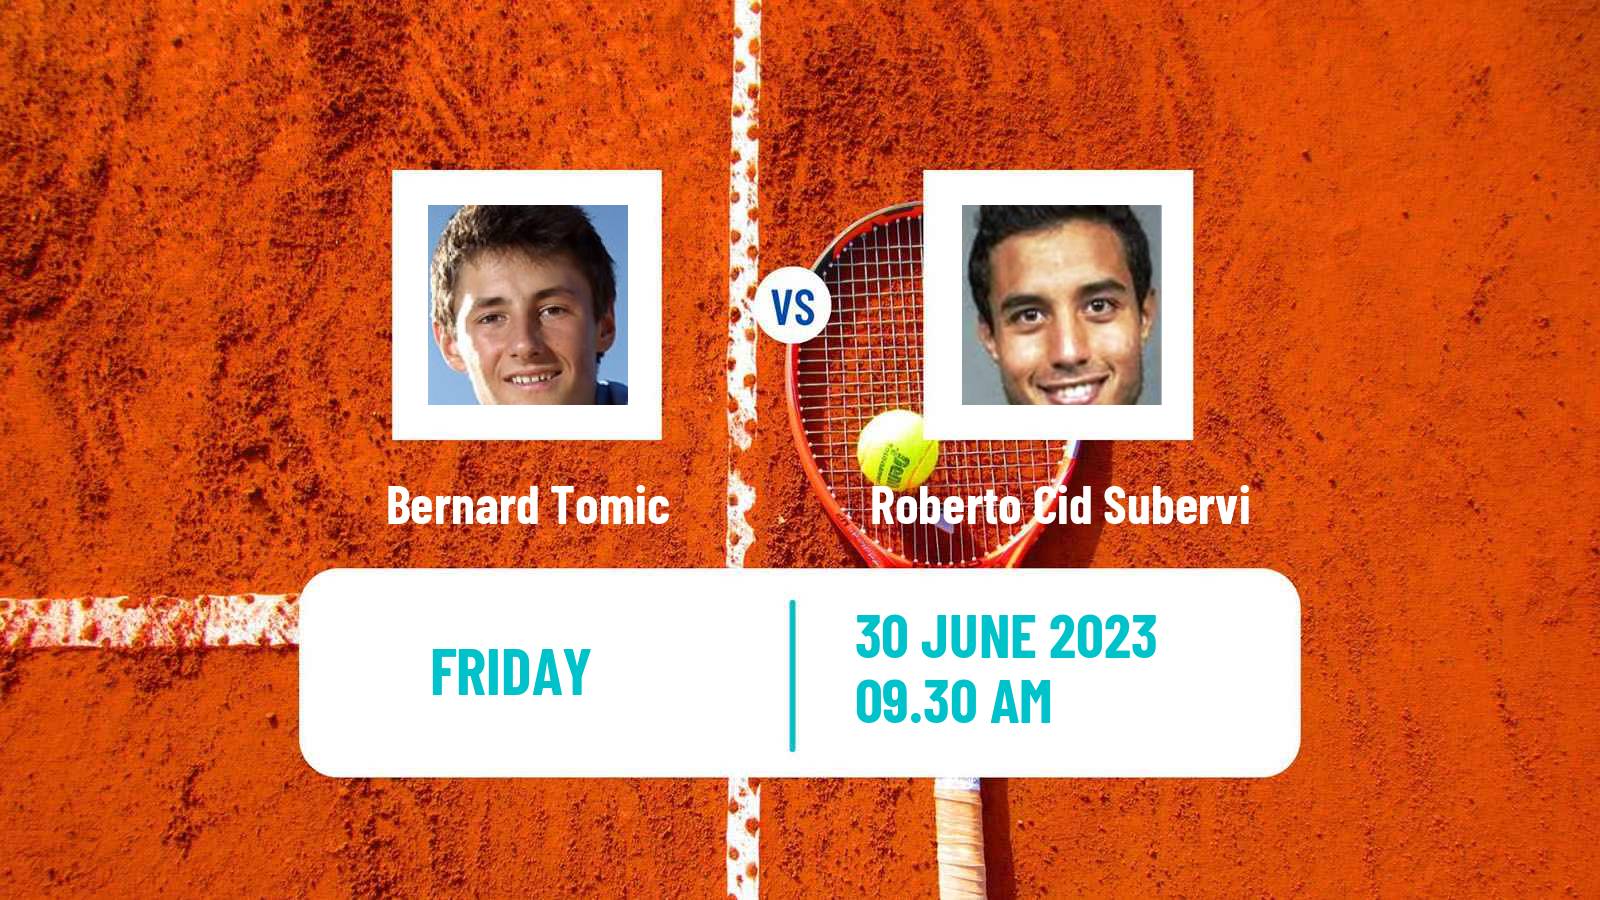 Tennis ITF M25 Santo Domingo 3 Men Bernard Tomic - Roberto Cid Subervi